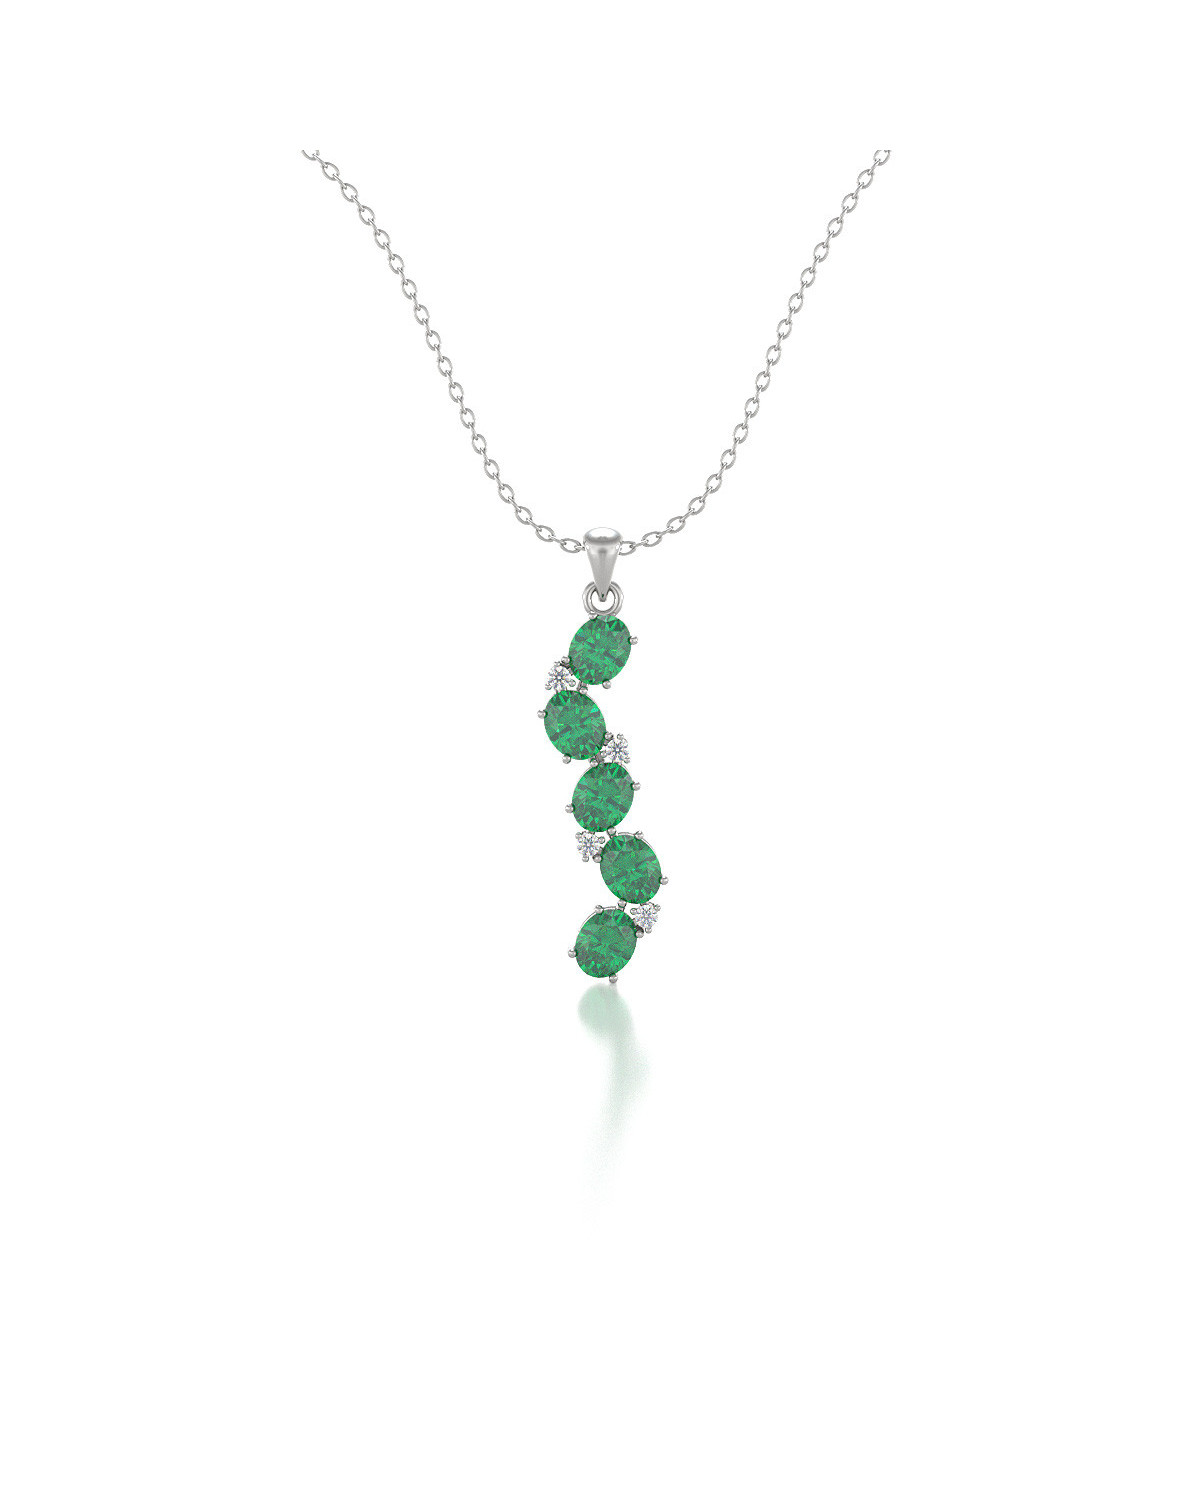 925 Silver Emerald Diamonds Necklace Pendant Chain included ADEN - 1